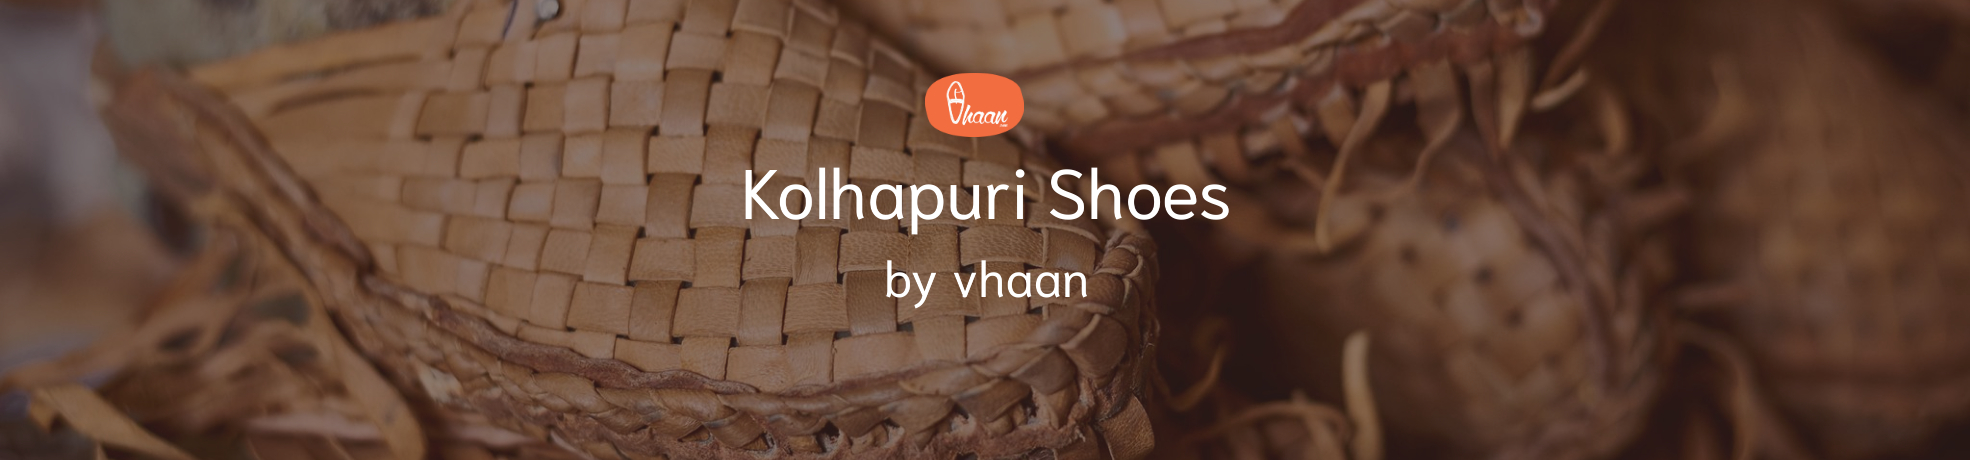 Kolhapuri Shoes